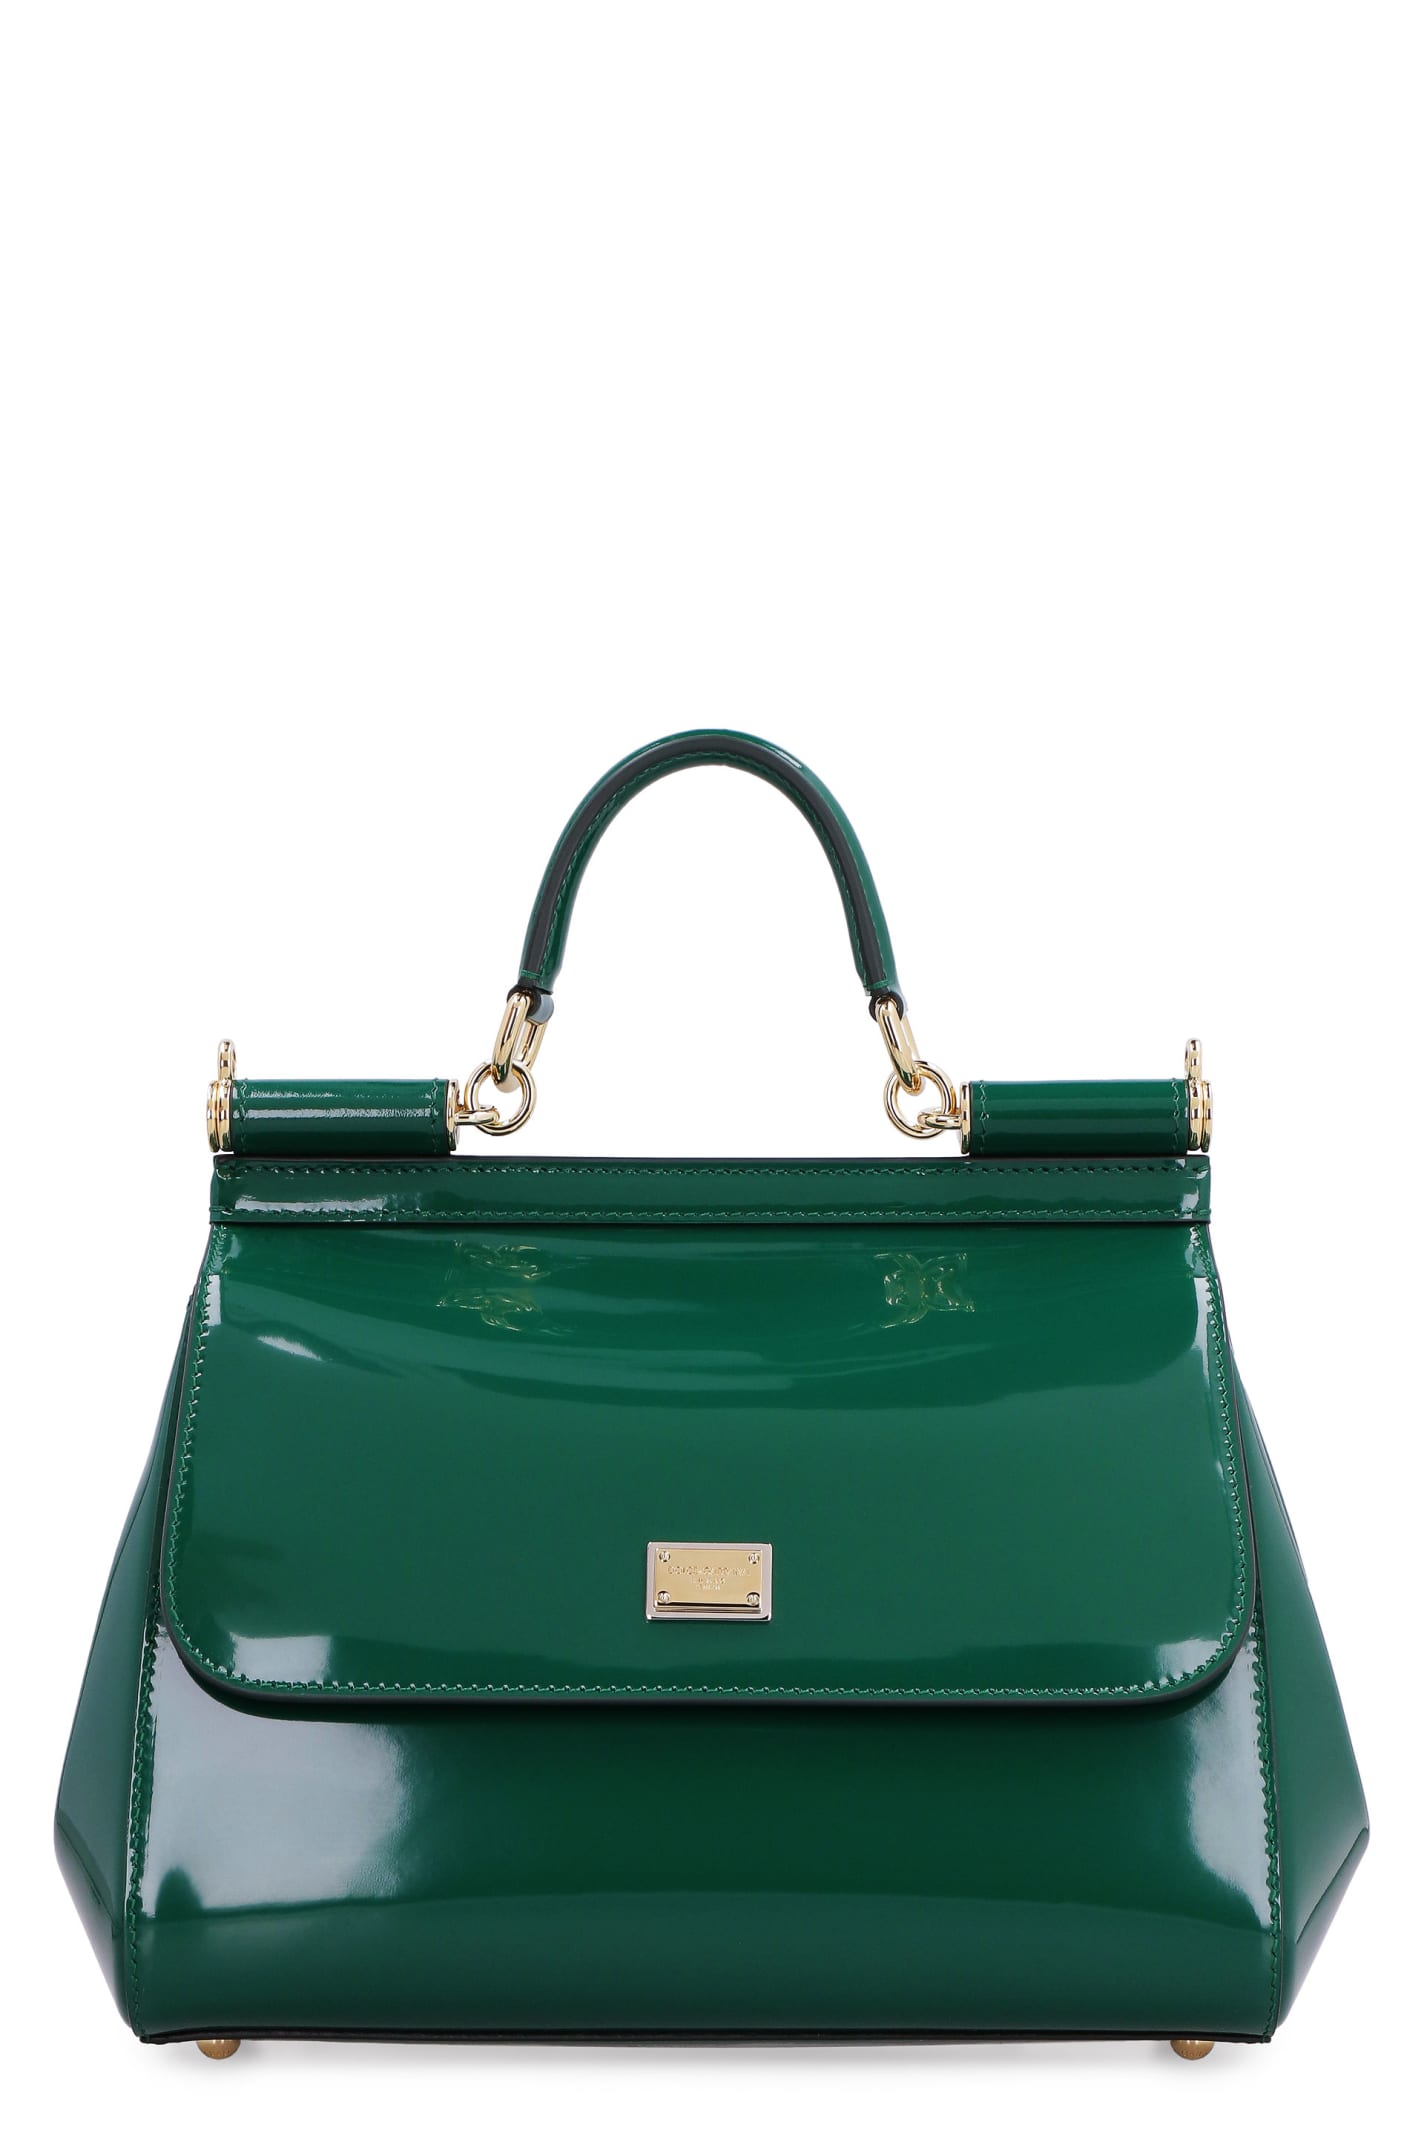 Dolce & Gabbana Sicily Patent Leather Handbag